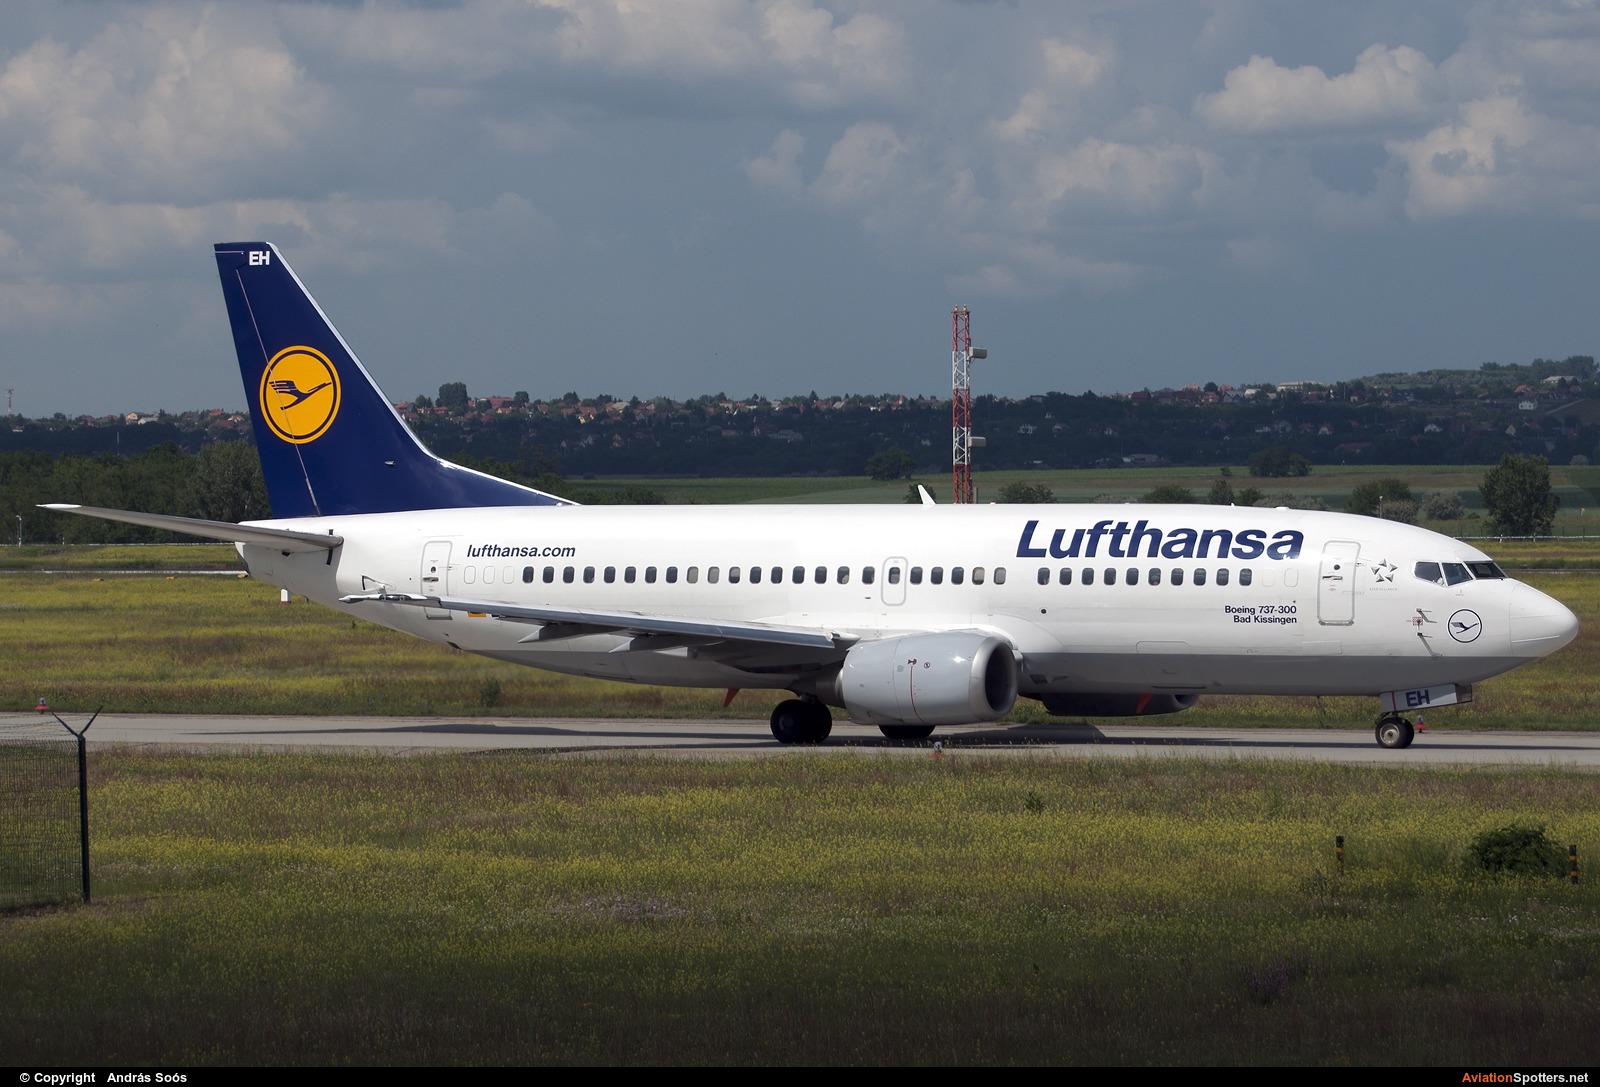 Lufthansa  -  737-300  (D-ABEH) By András Soós (sas1965)